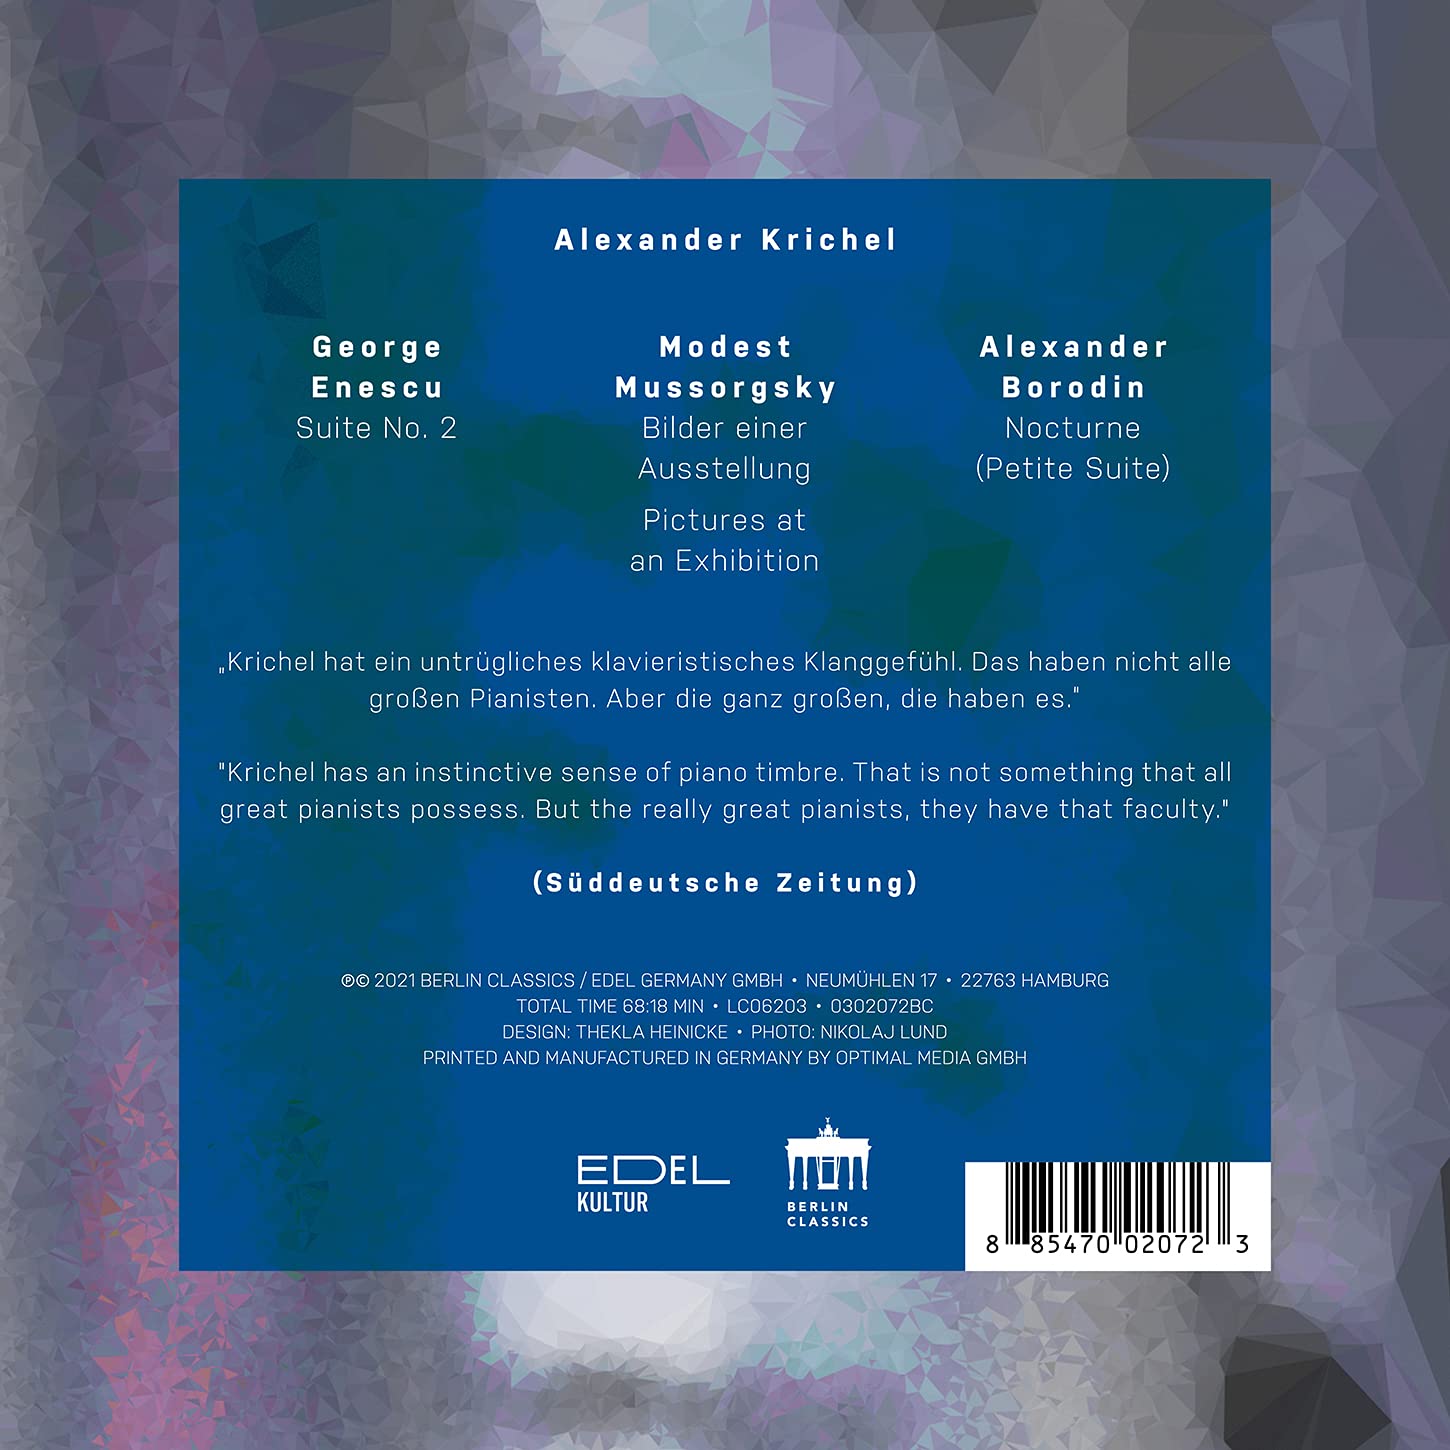 Alexander Krichel 무소르그스키: 전람회의 그림 / 에네스쿠: 모음곡 2번 / 보로딘: 녹턴 (Mussorgsky: Pictures at an Exhibition / Enescu: Suite No.2 / Borodin: Nocturne) 